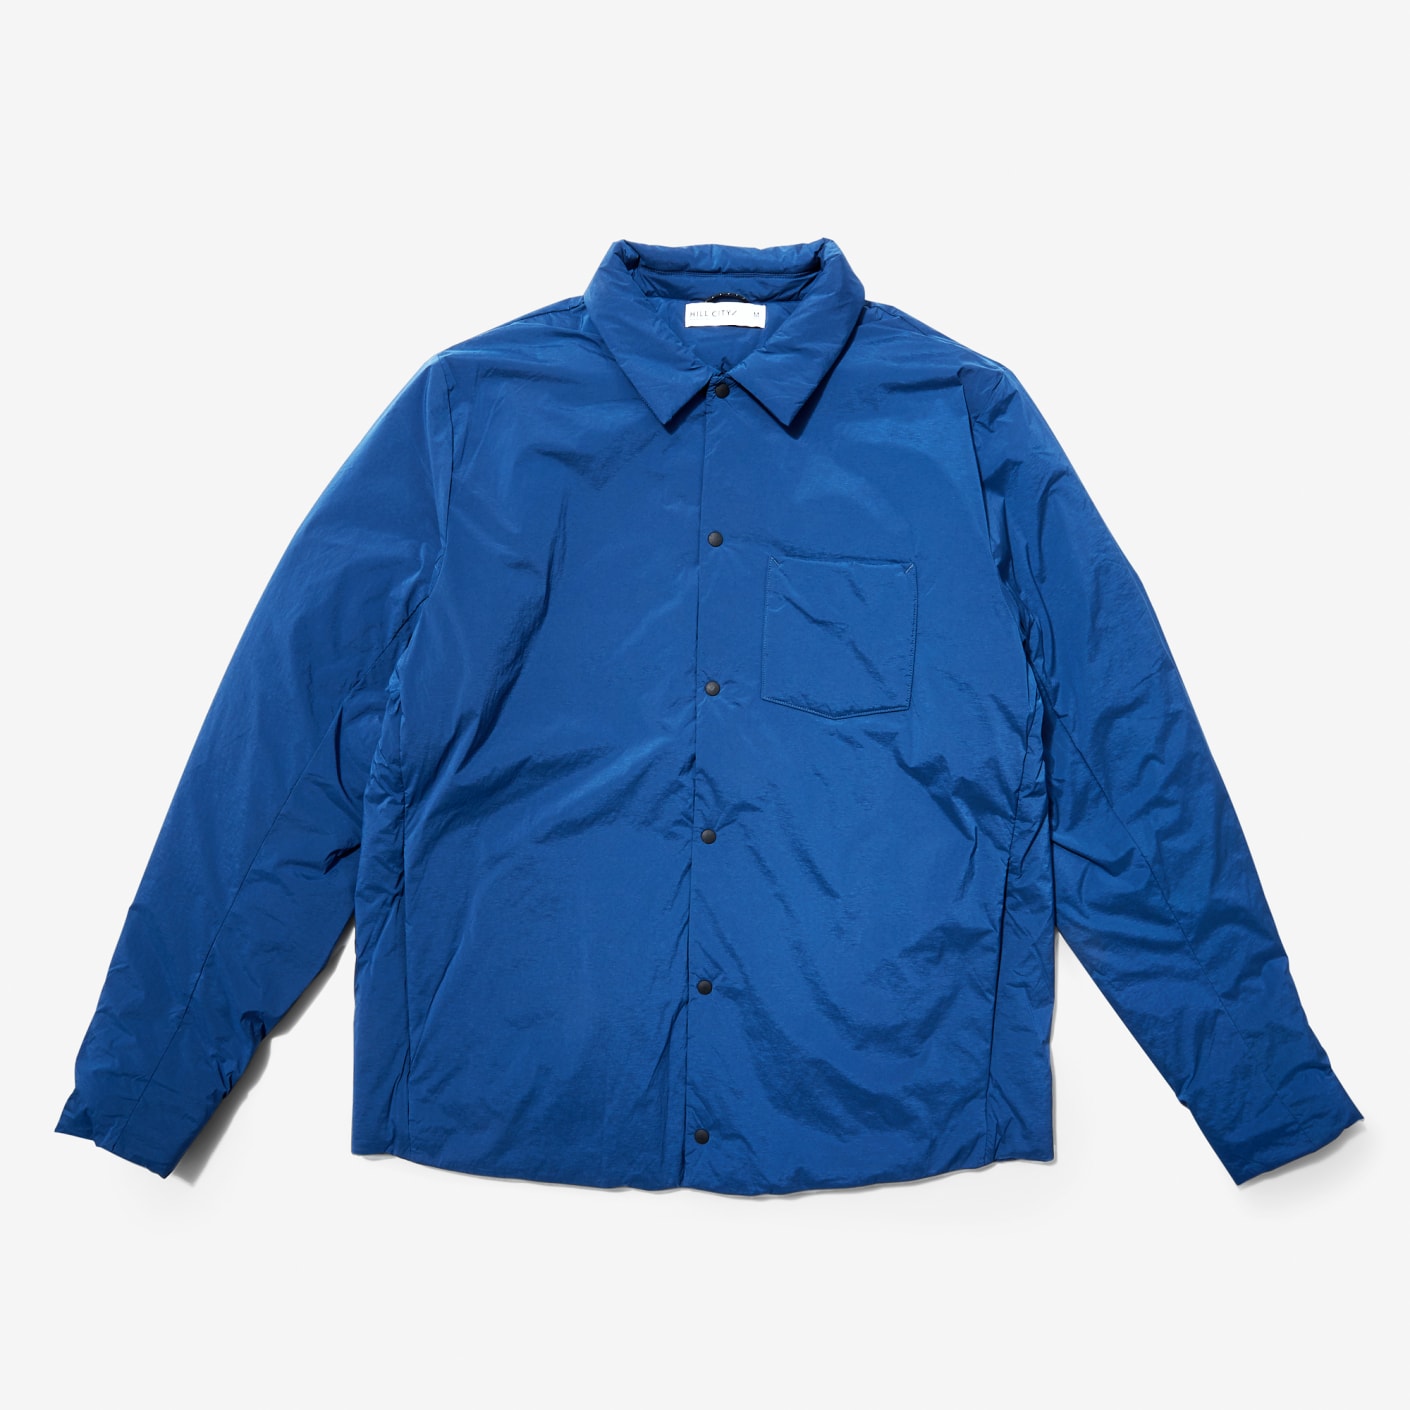 Hill City Thermal Light Shirt Jacket – Steel Blue | Bespoke Post